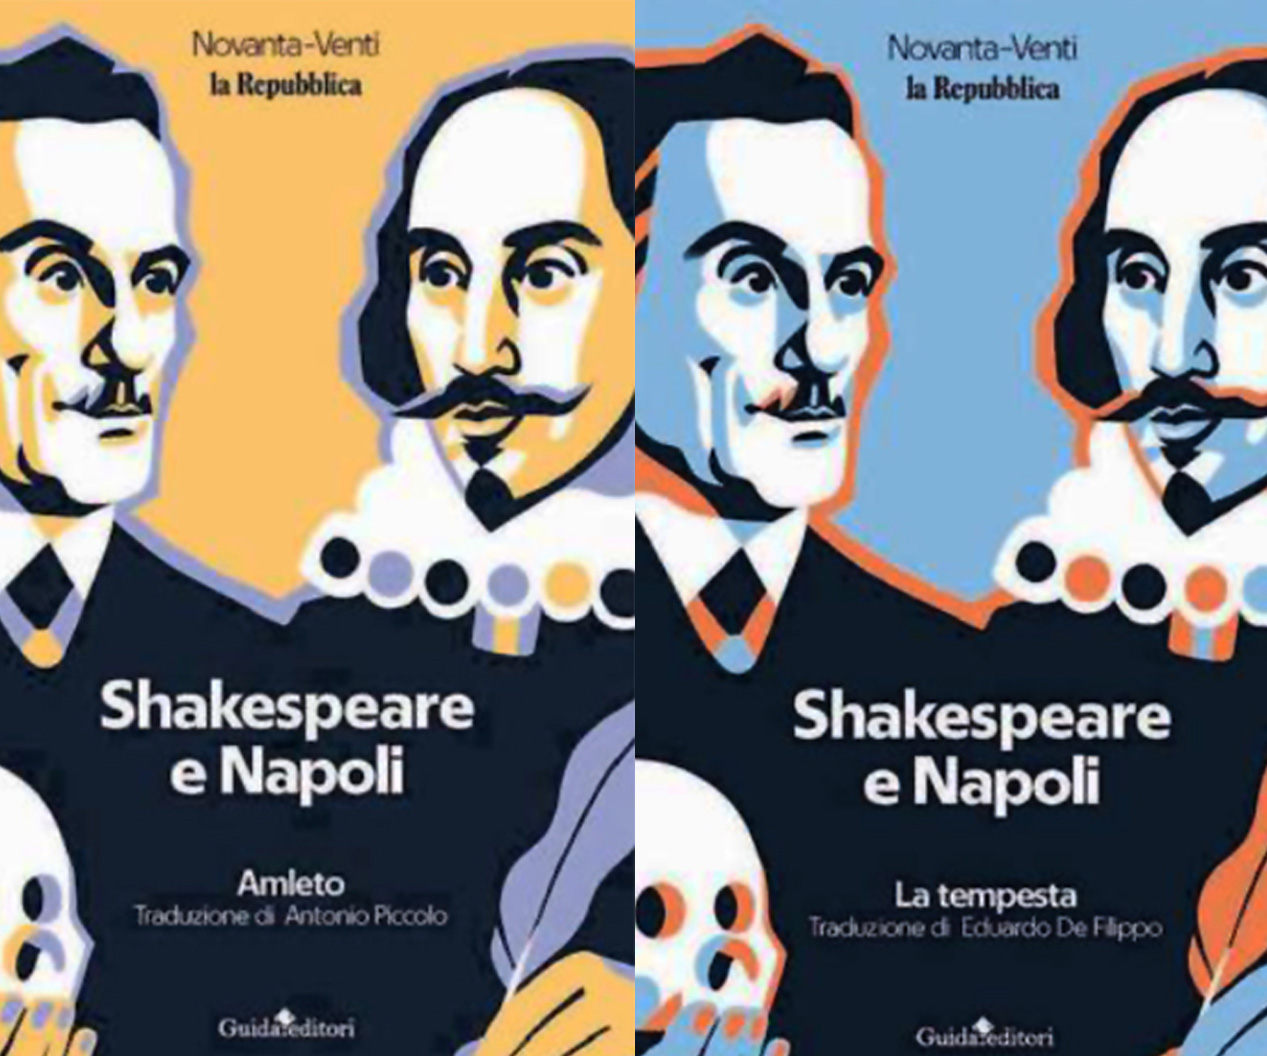 Presentati i due volumi Shakespeare e Napoli